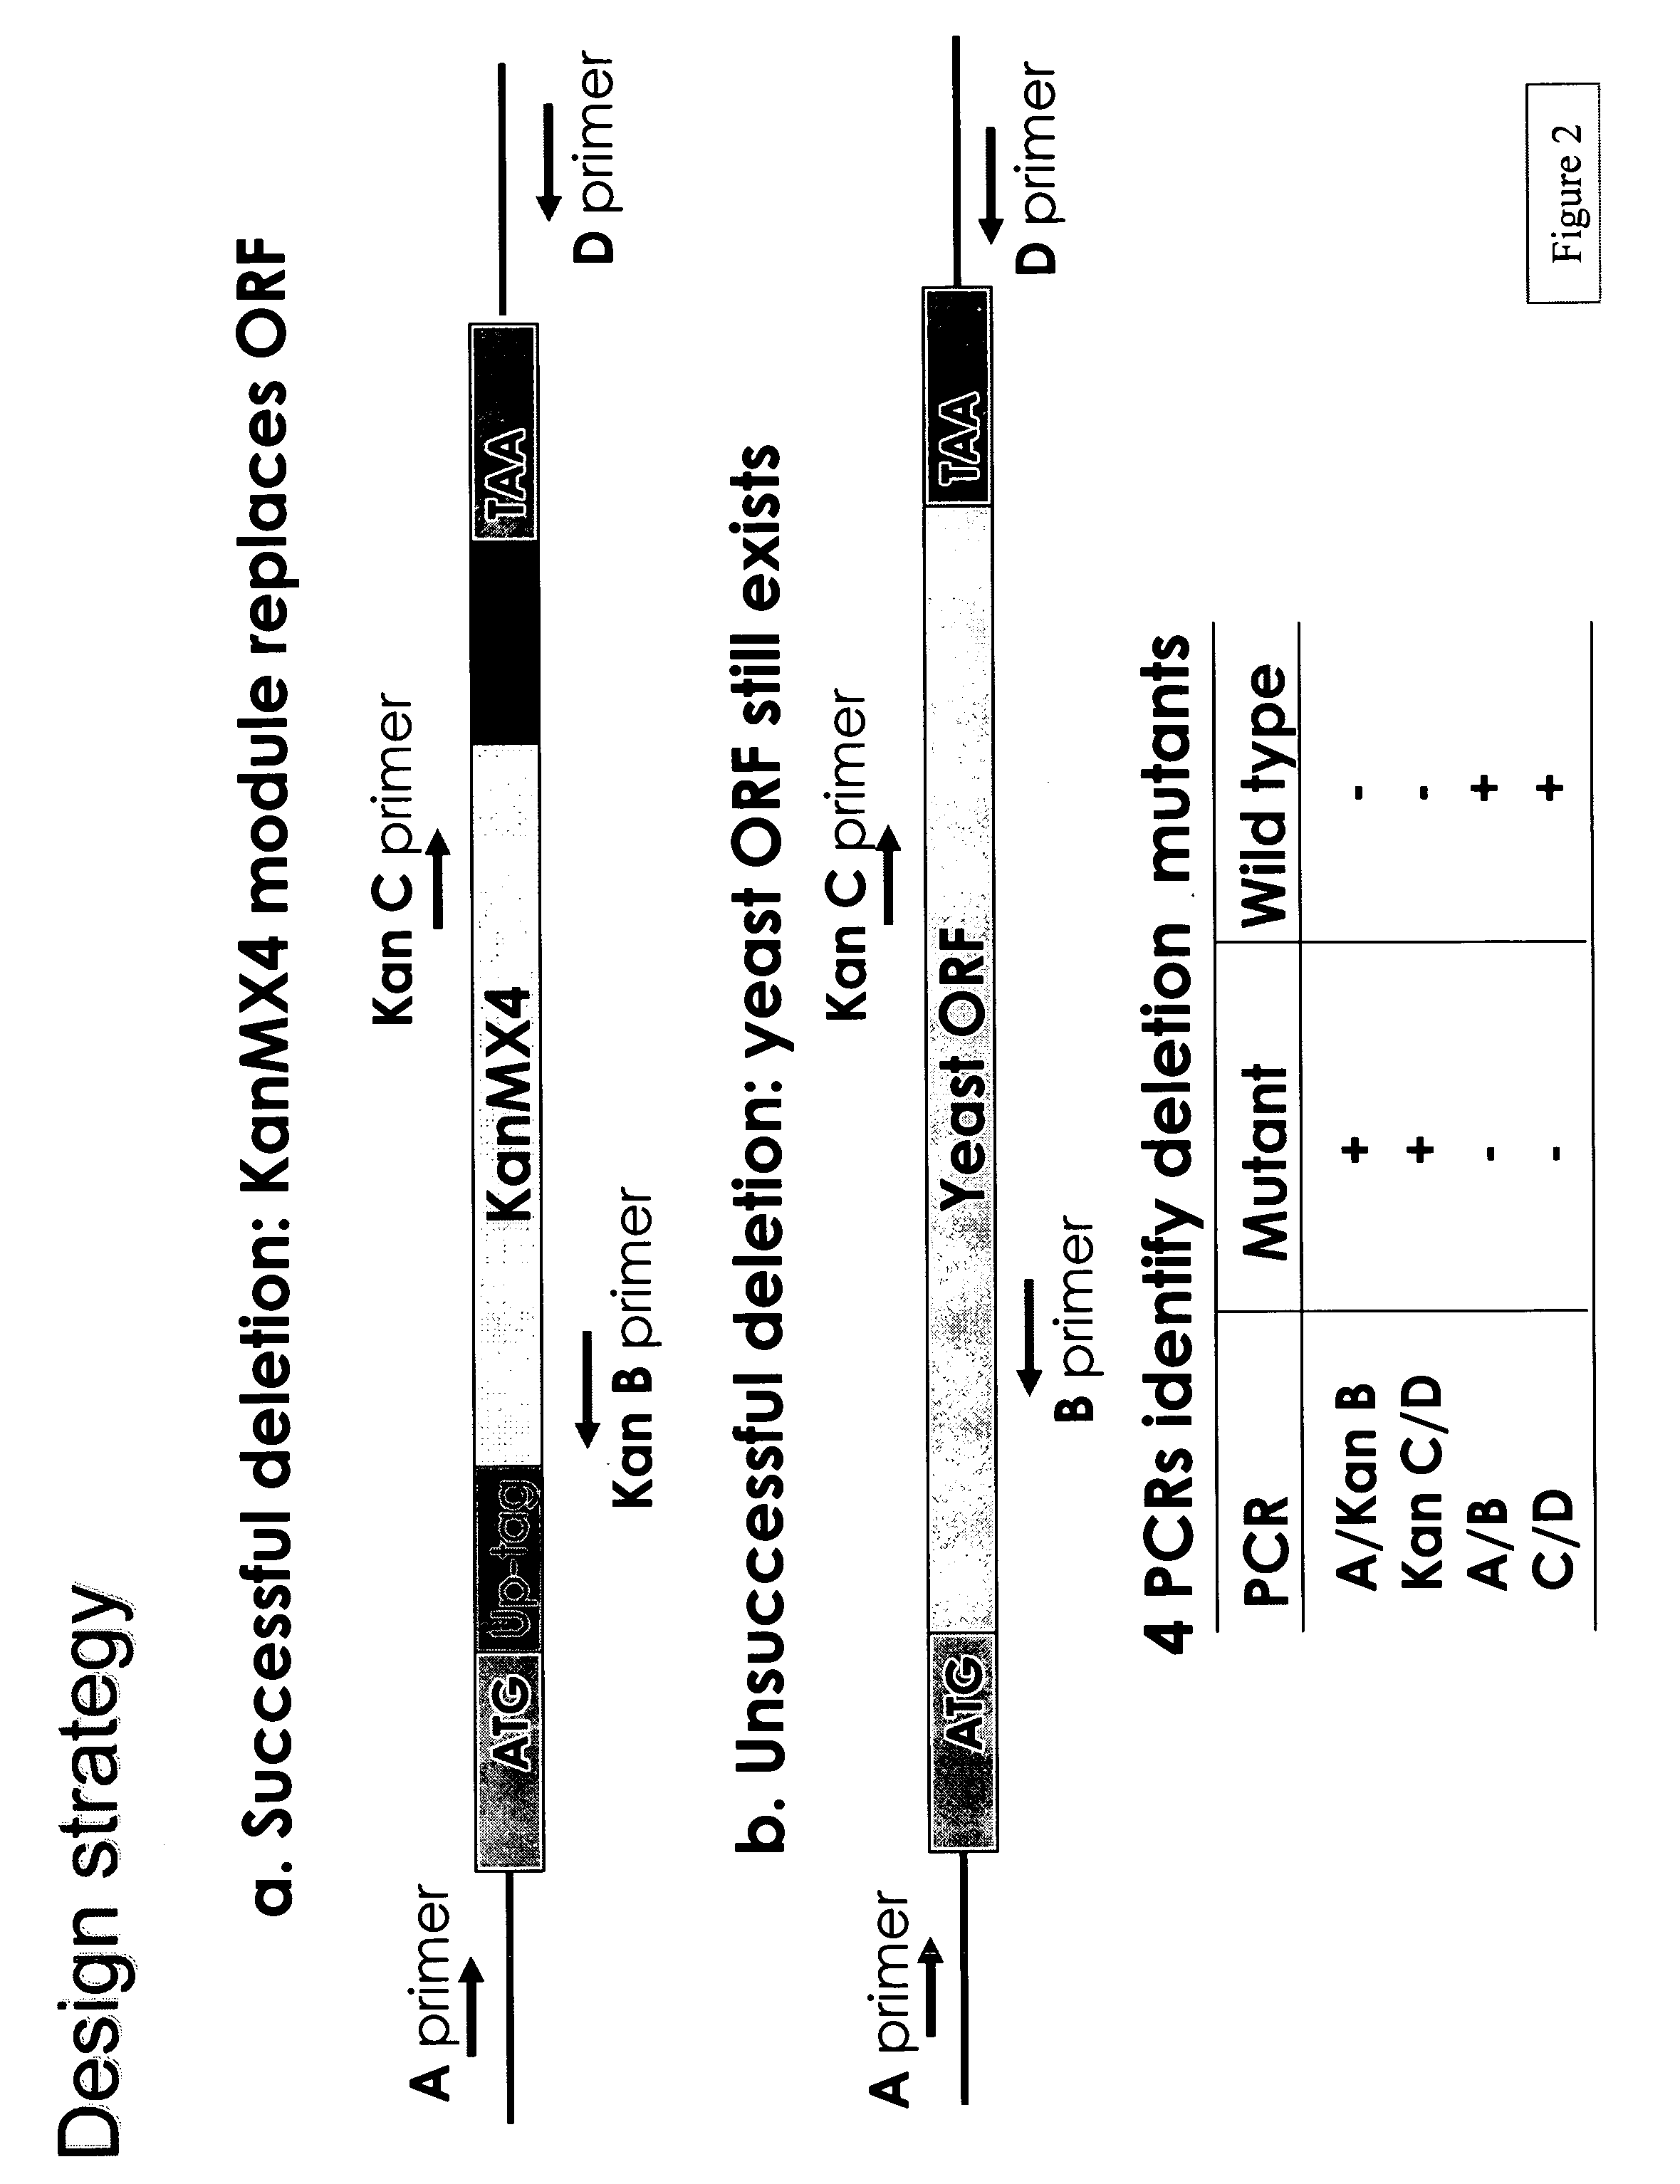 Potentiation of antifungal compounds